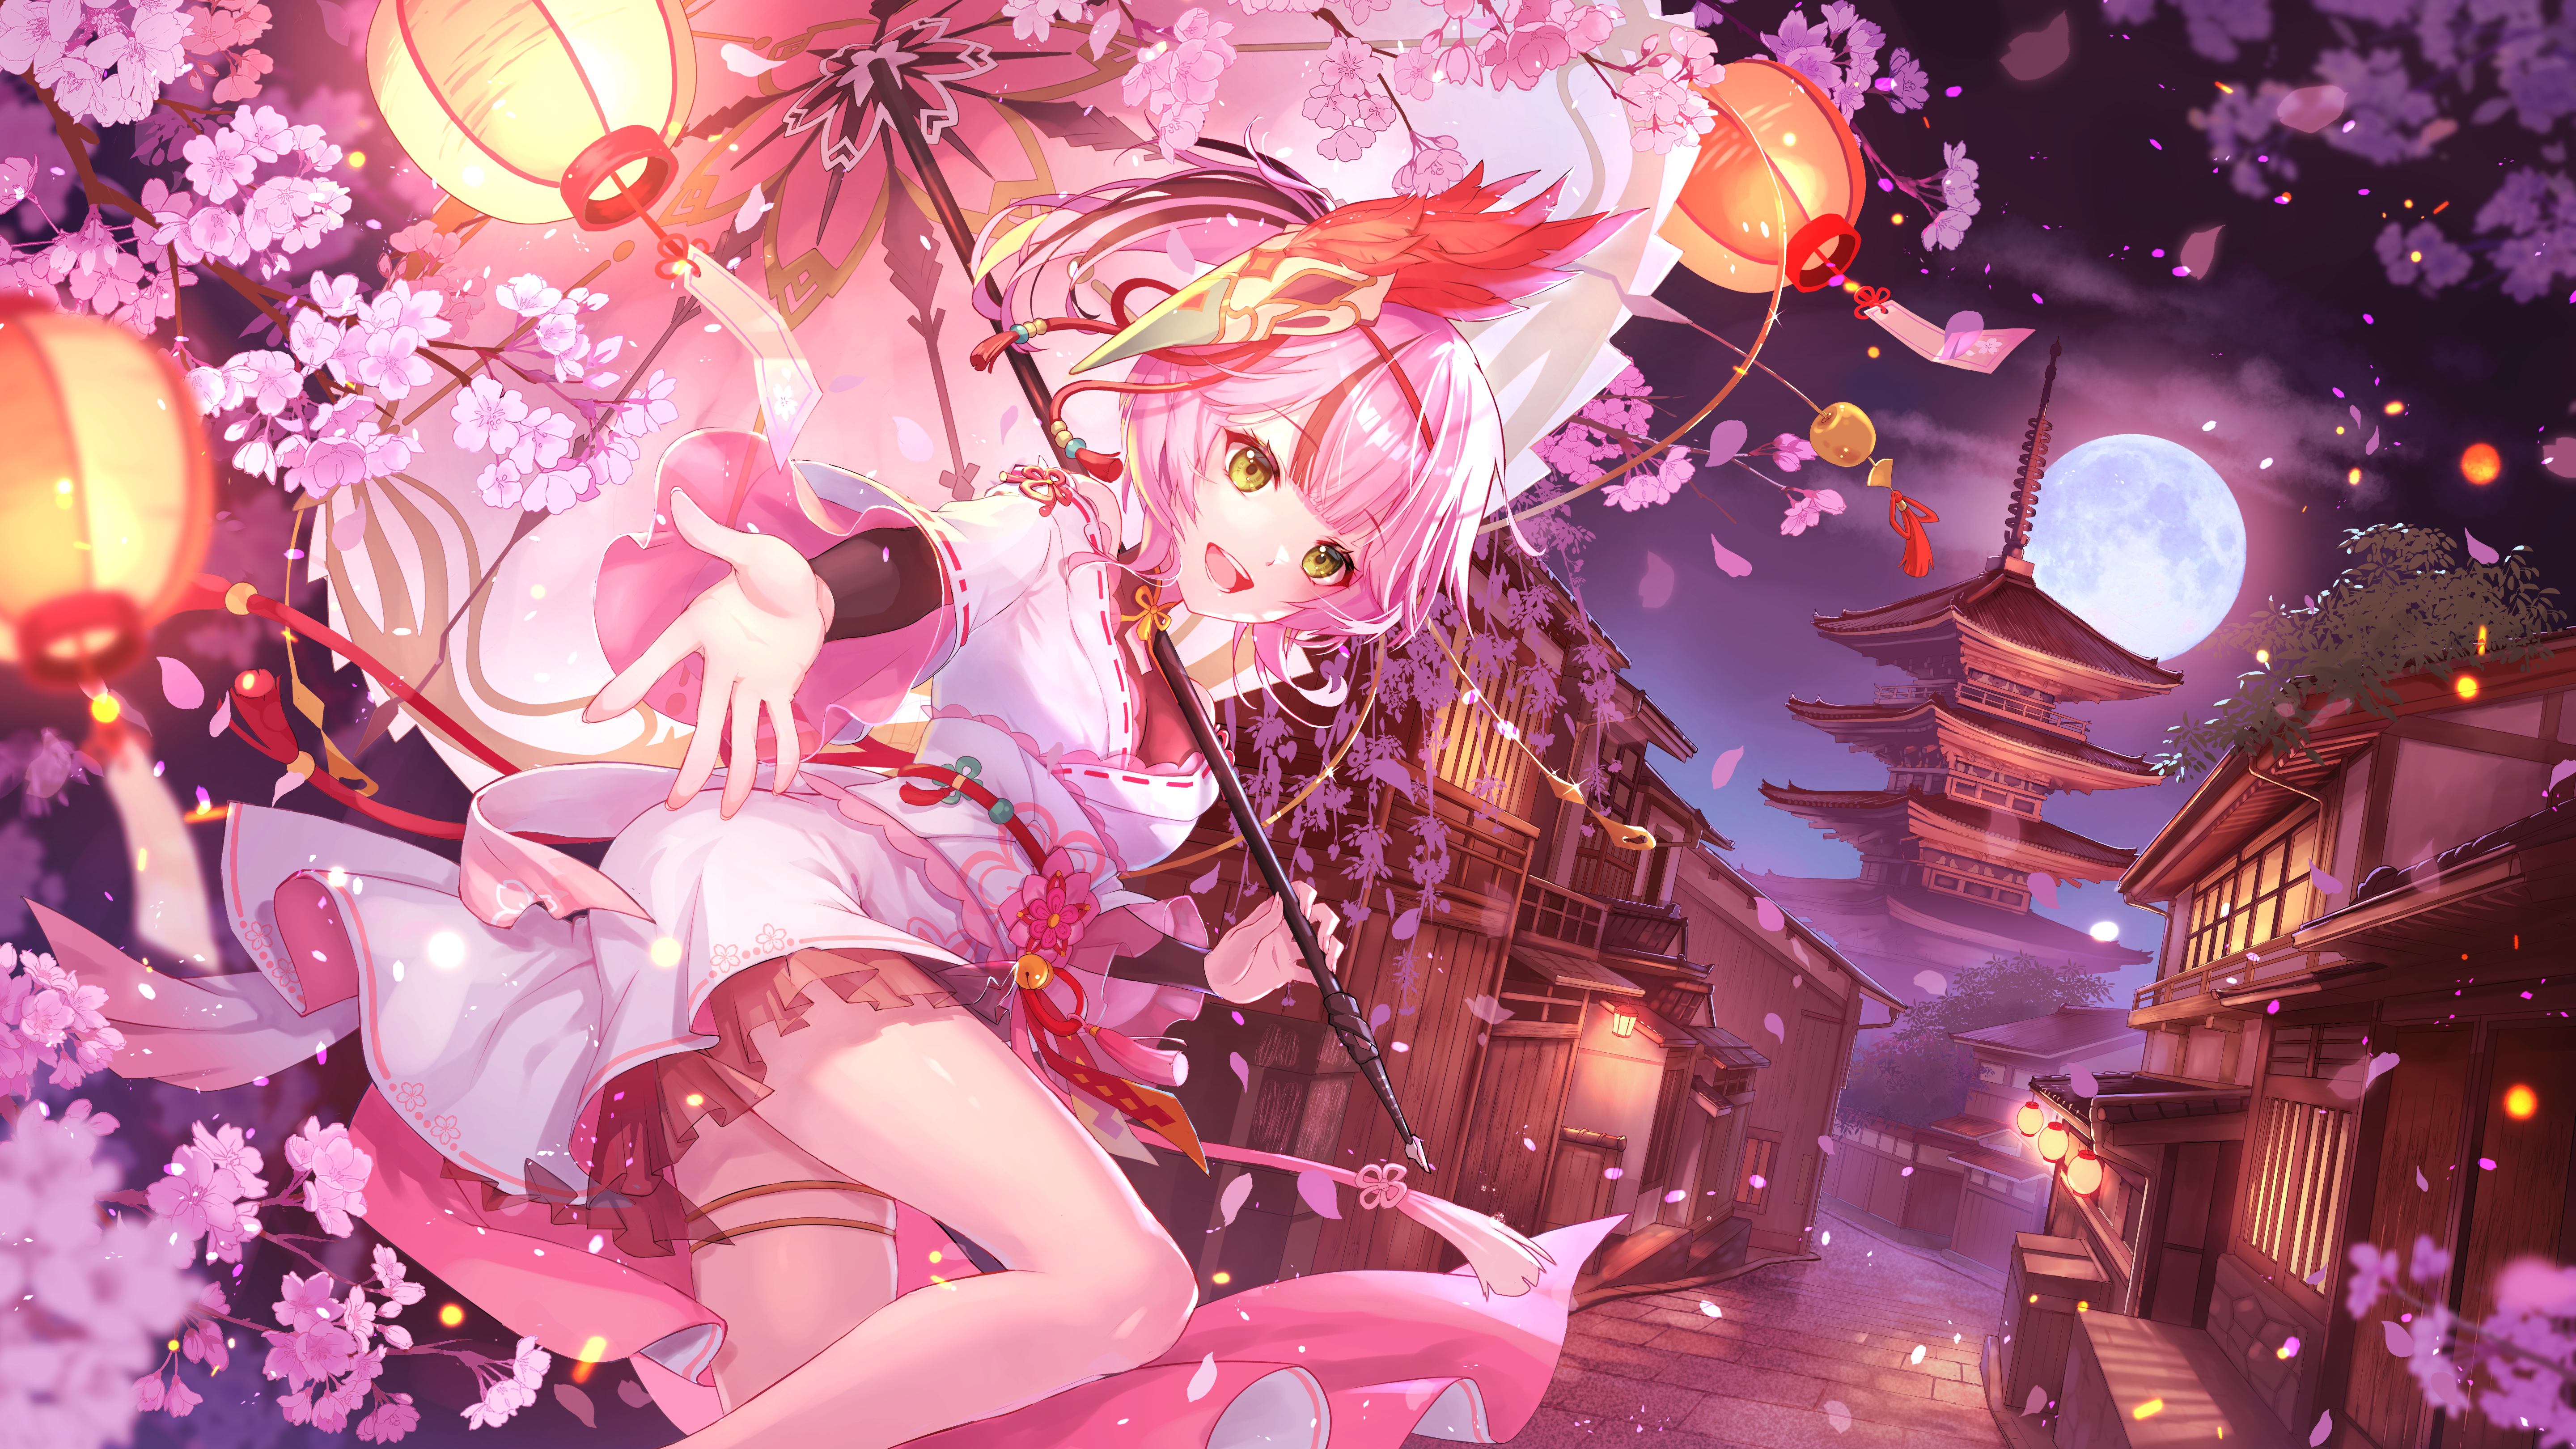 Anime Anime Girls Arms Reaching Night Moon Petals Umbrella Lantern Looking At Viewer Village Buildin 5760x3240